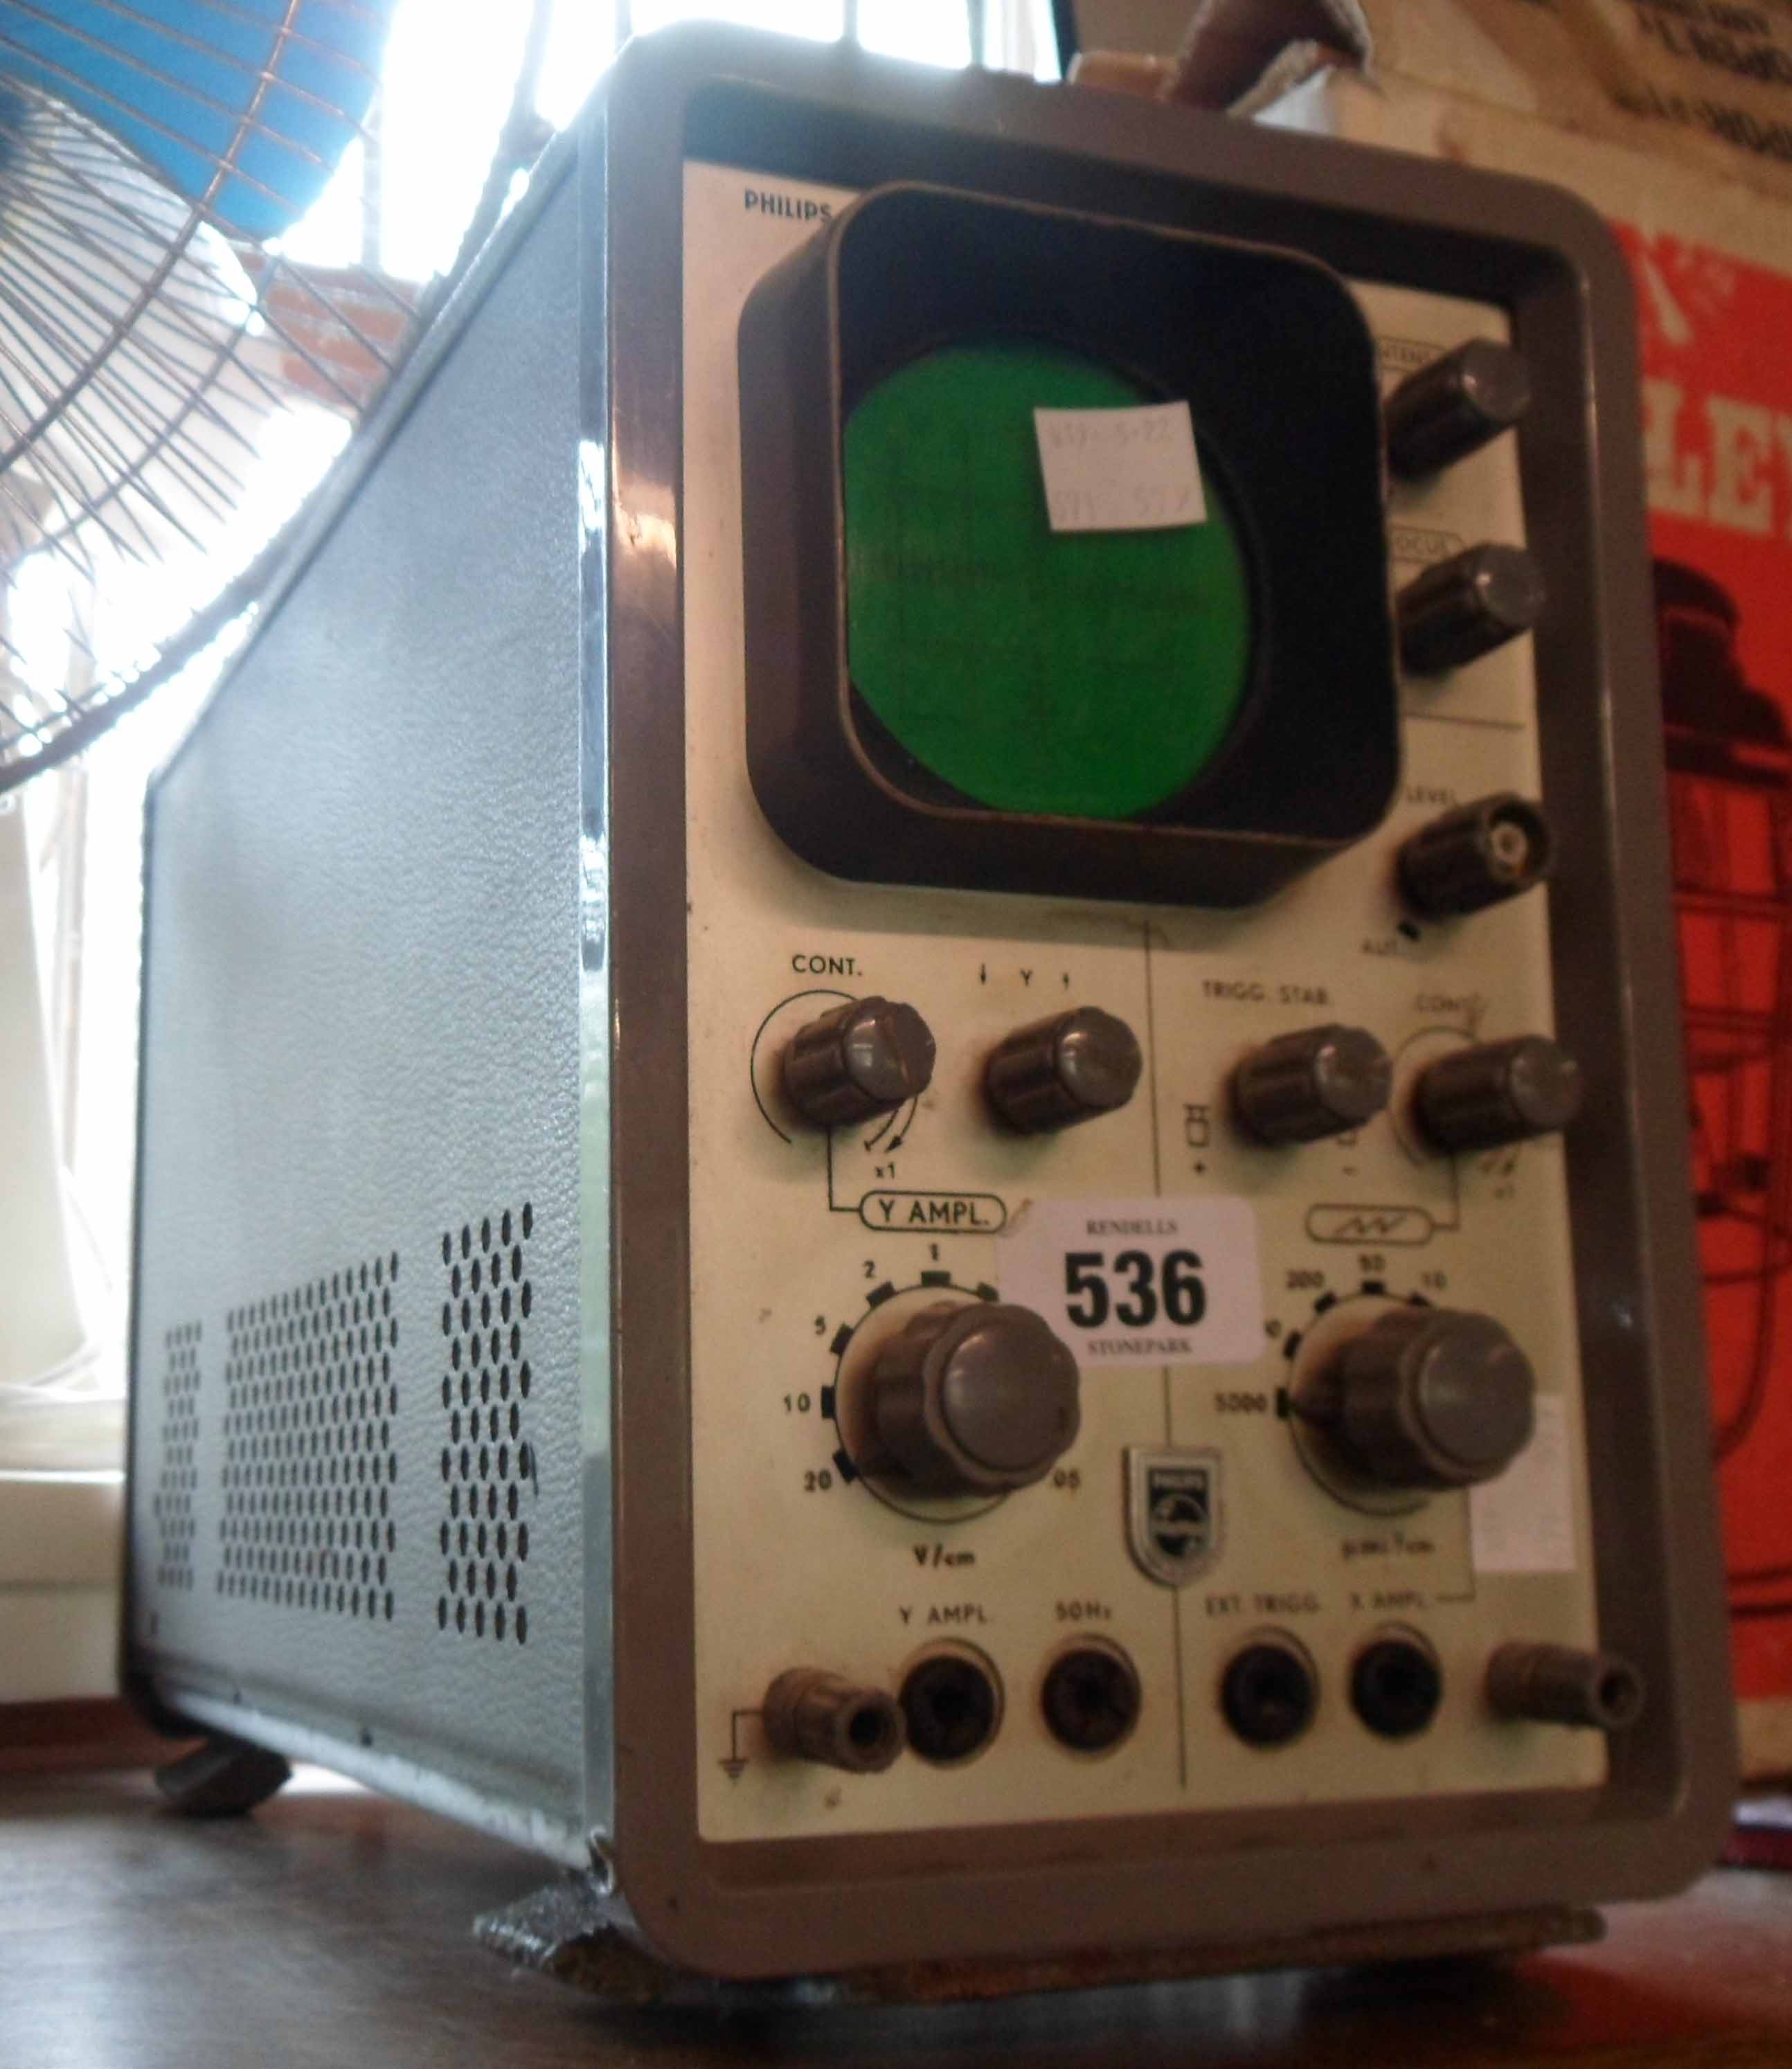 A Philips GM 5600 oscilloscope